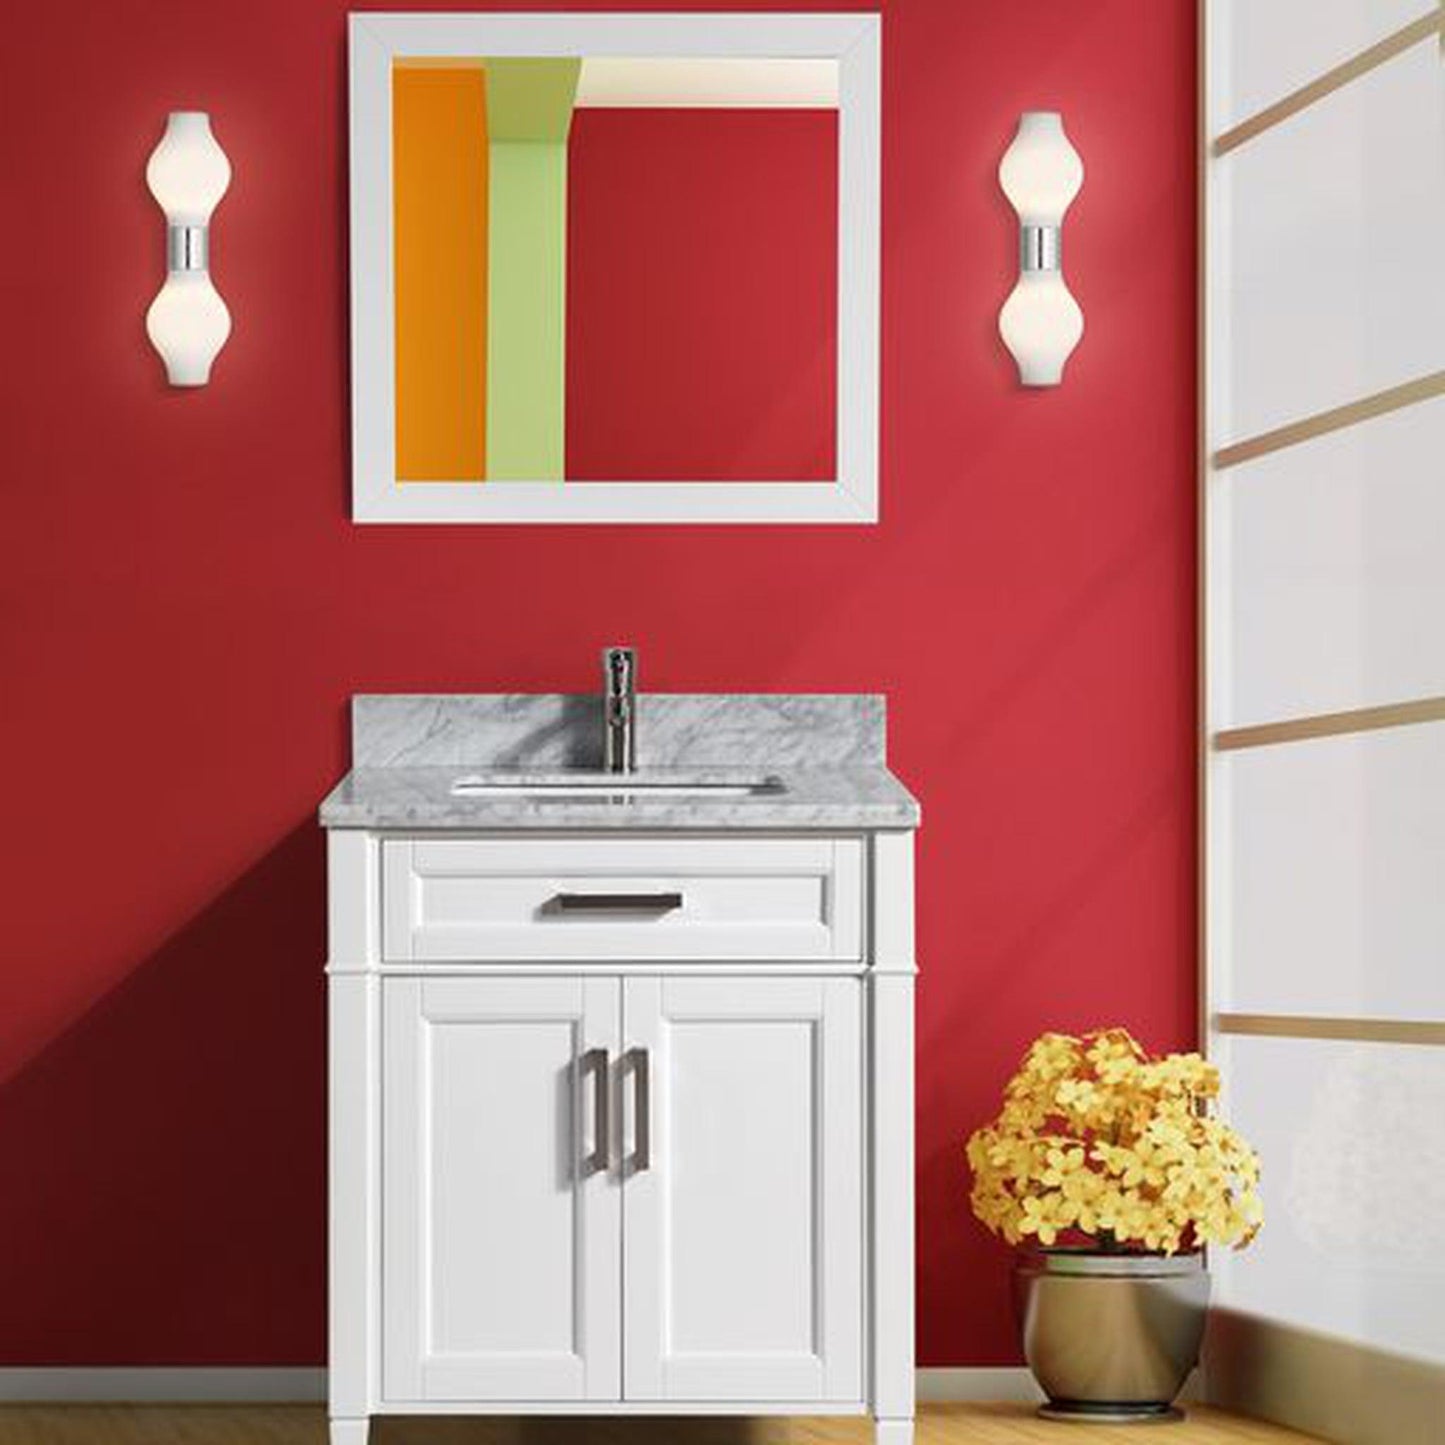 Vanity Art Savona 30" Single White Freestanding Modern Bathroom Vanity Set With Carrara Marble Top, Undermount Ceramic Sink, 1 Dovetail Drawer Cabinet, Backsplash and Mirror